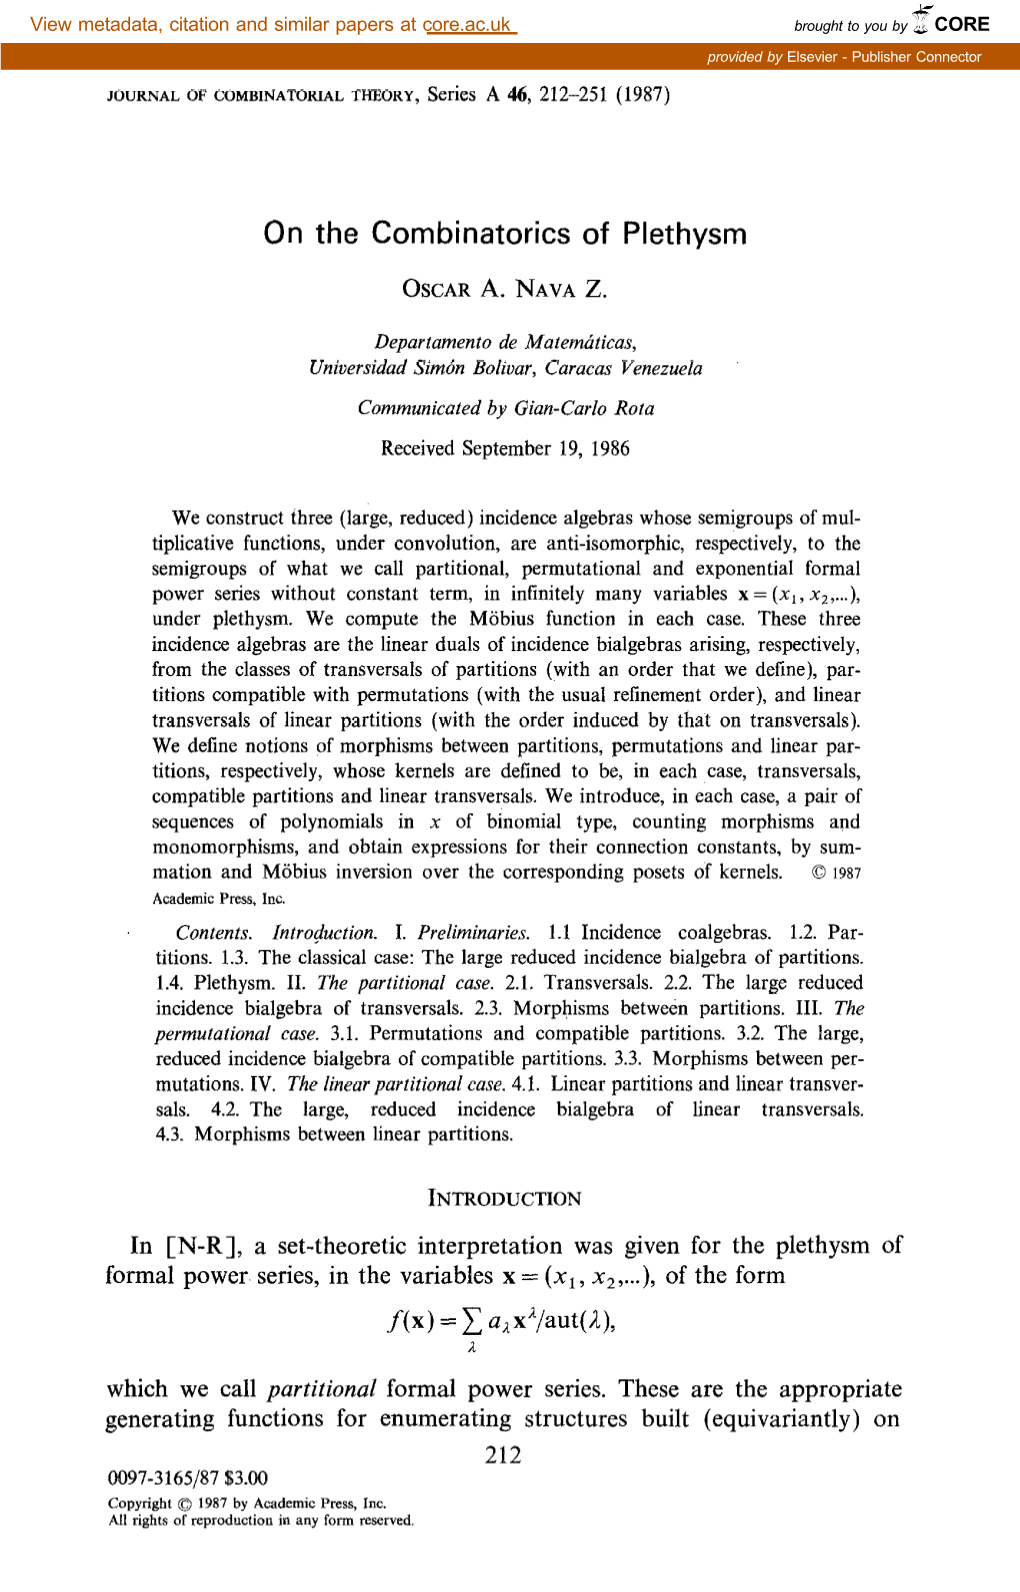 On the Combinatorics of Plethysm F(X)